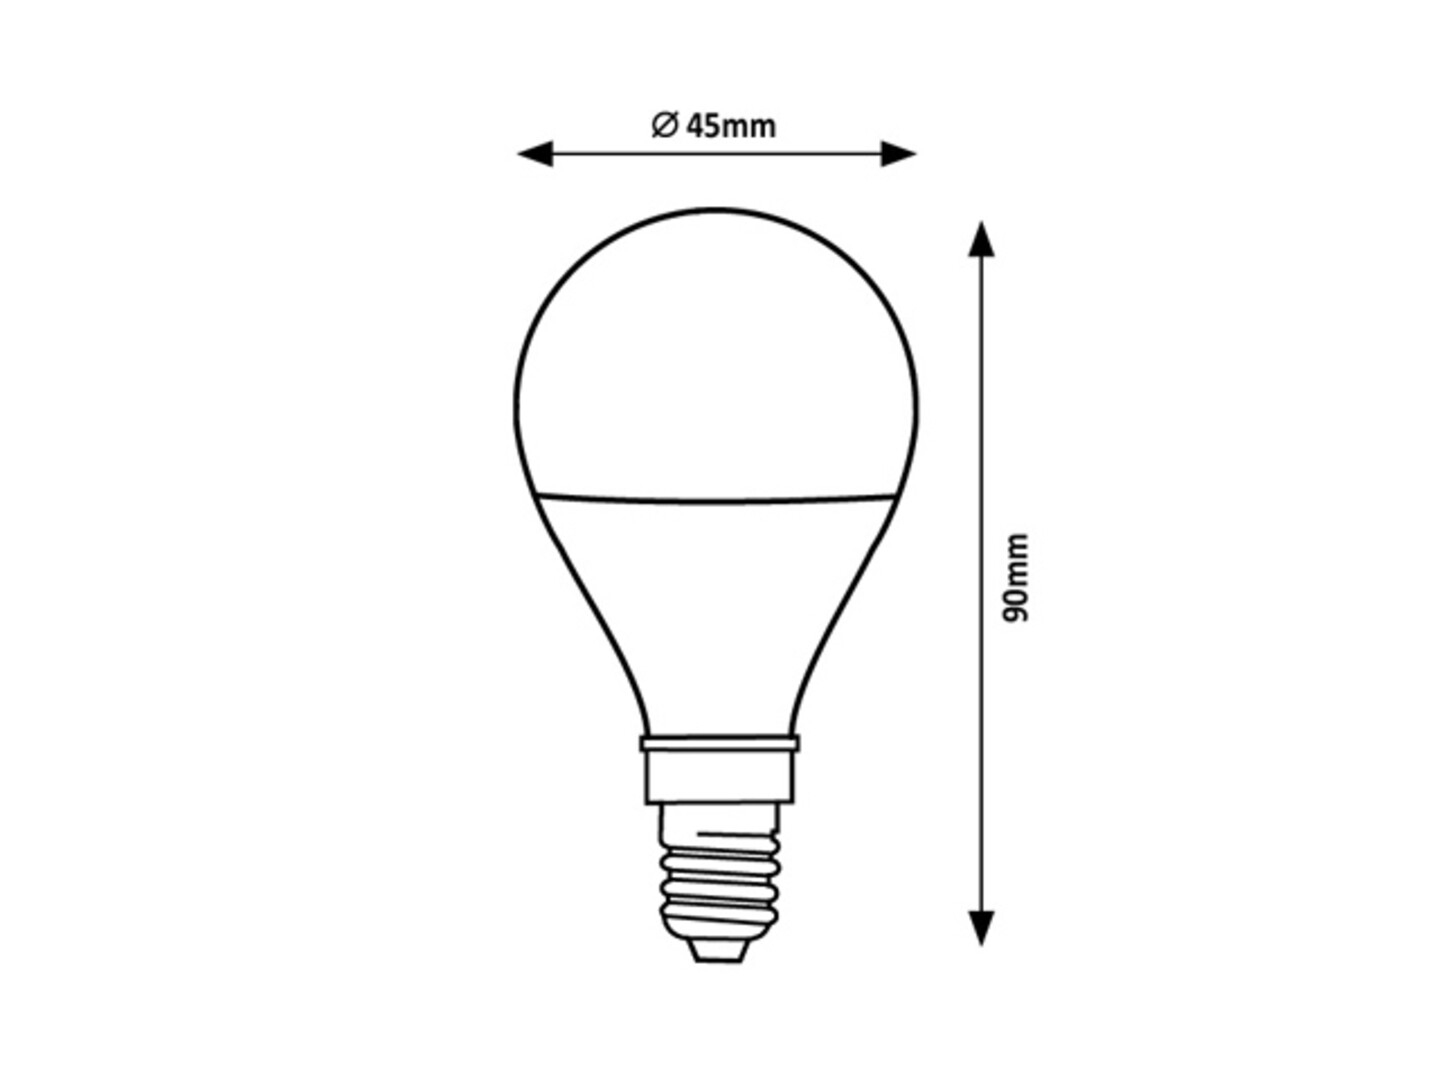 LED-Leuchtmittel 79003, E14, 5W, 450lm, Kunststoff, weiß, rgb, smarthomefähig, ø45mm